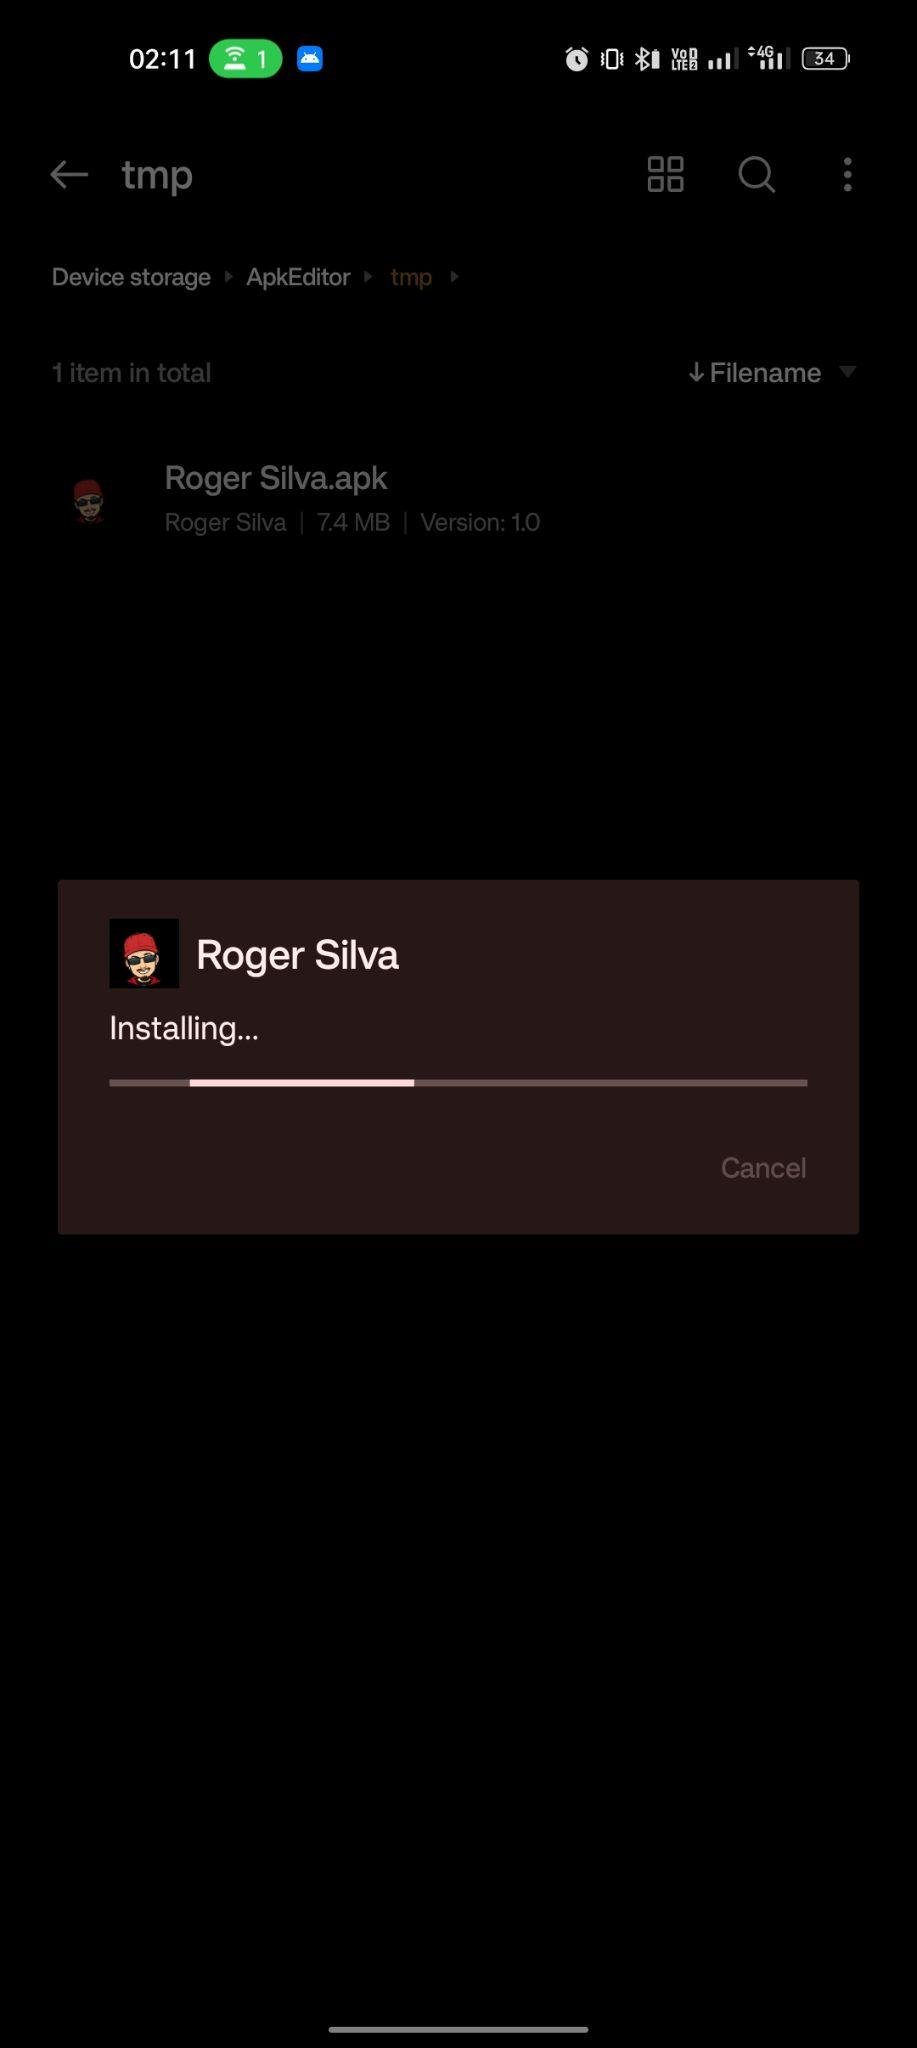 Roger Silva apk installing